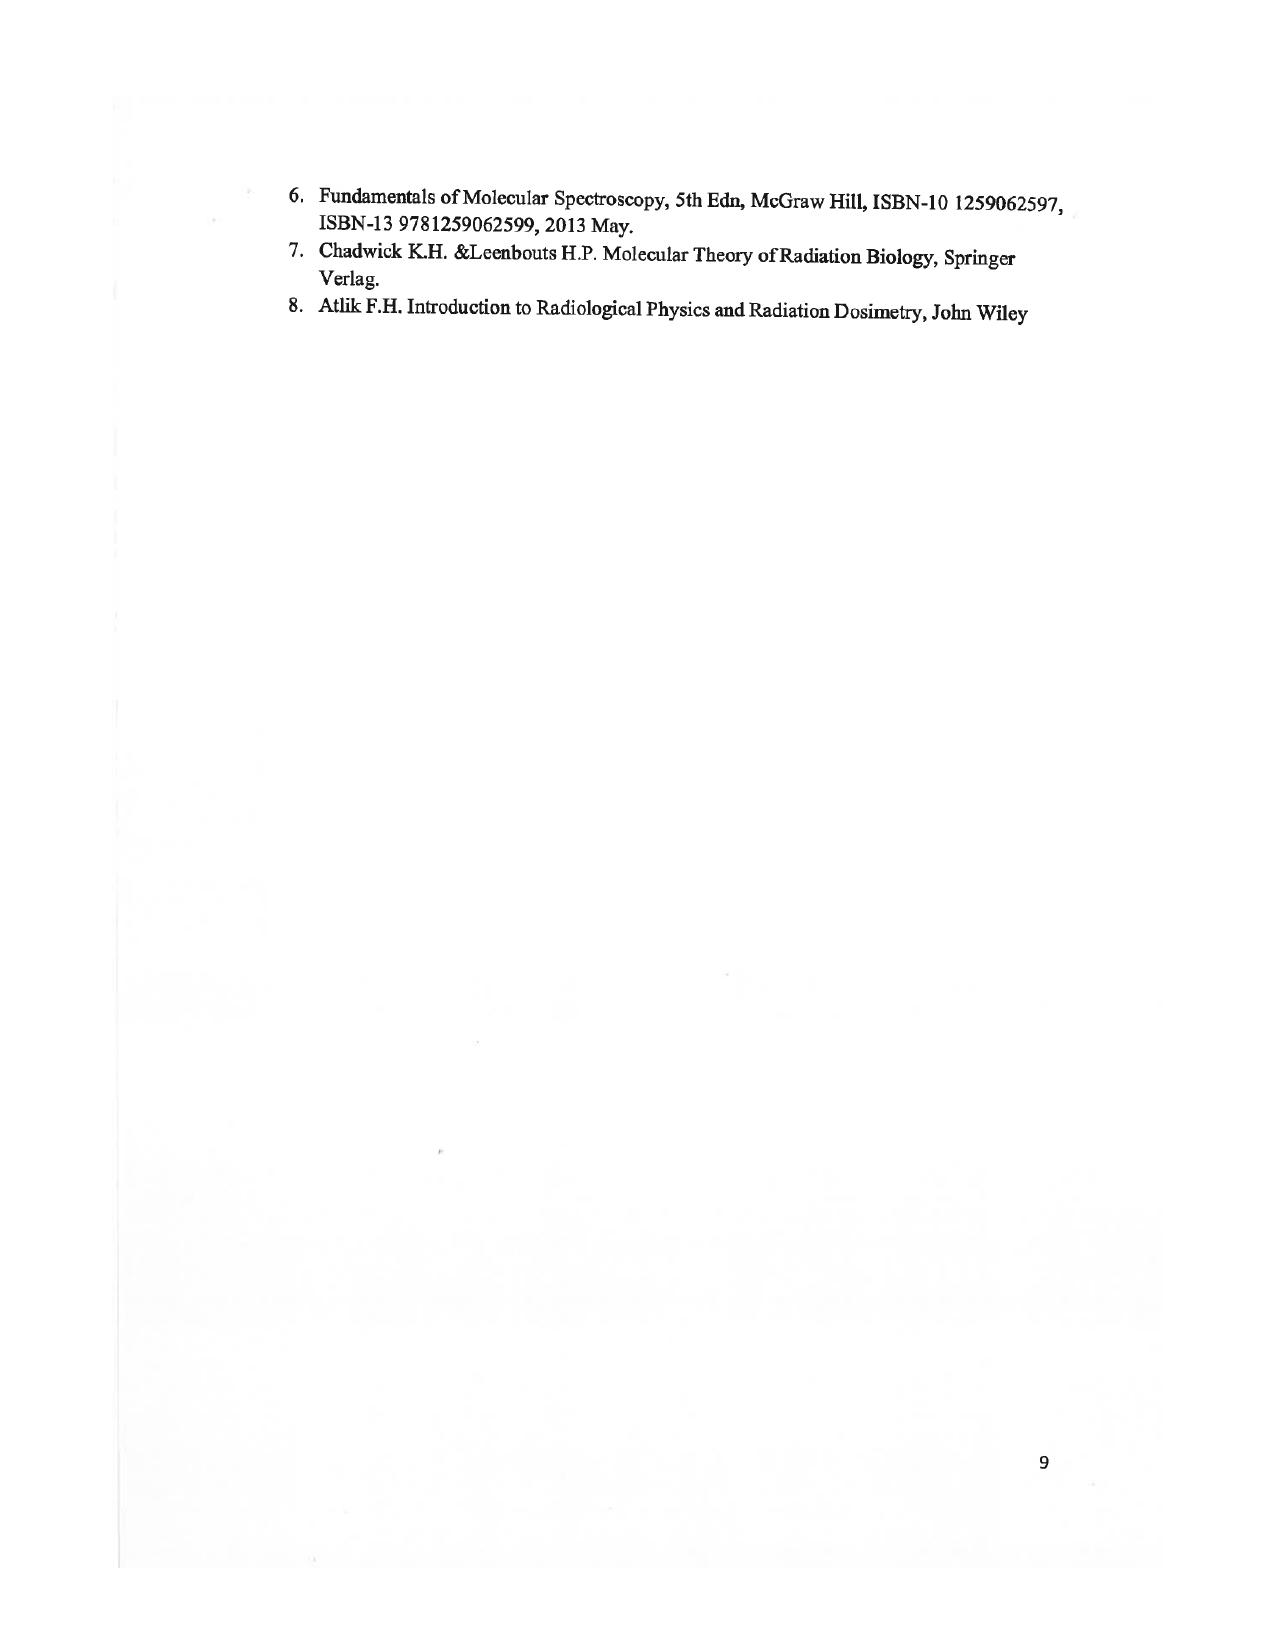 JMI Entrance Exam FACULTY OF NATURAL SCIENCES Syllabus - Page 9